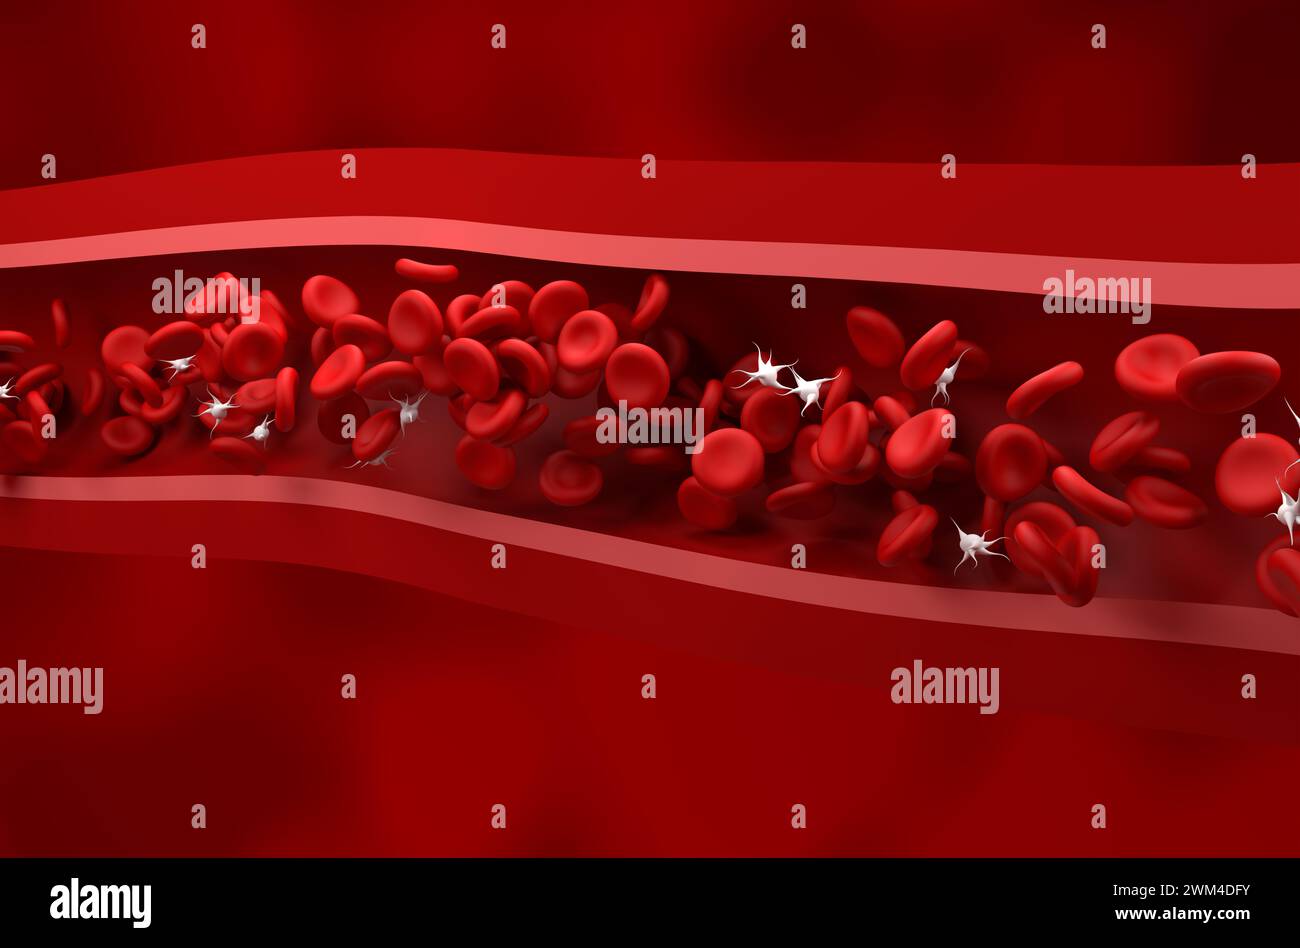 Reduced platelet (thrombocytes) count in Immune thrombocytopenic purpura (ITP) - isometric view 3d illustration Stock Photo